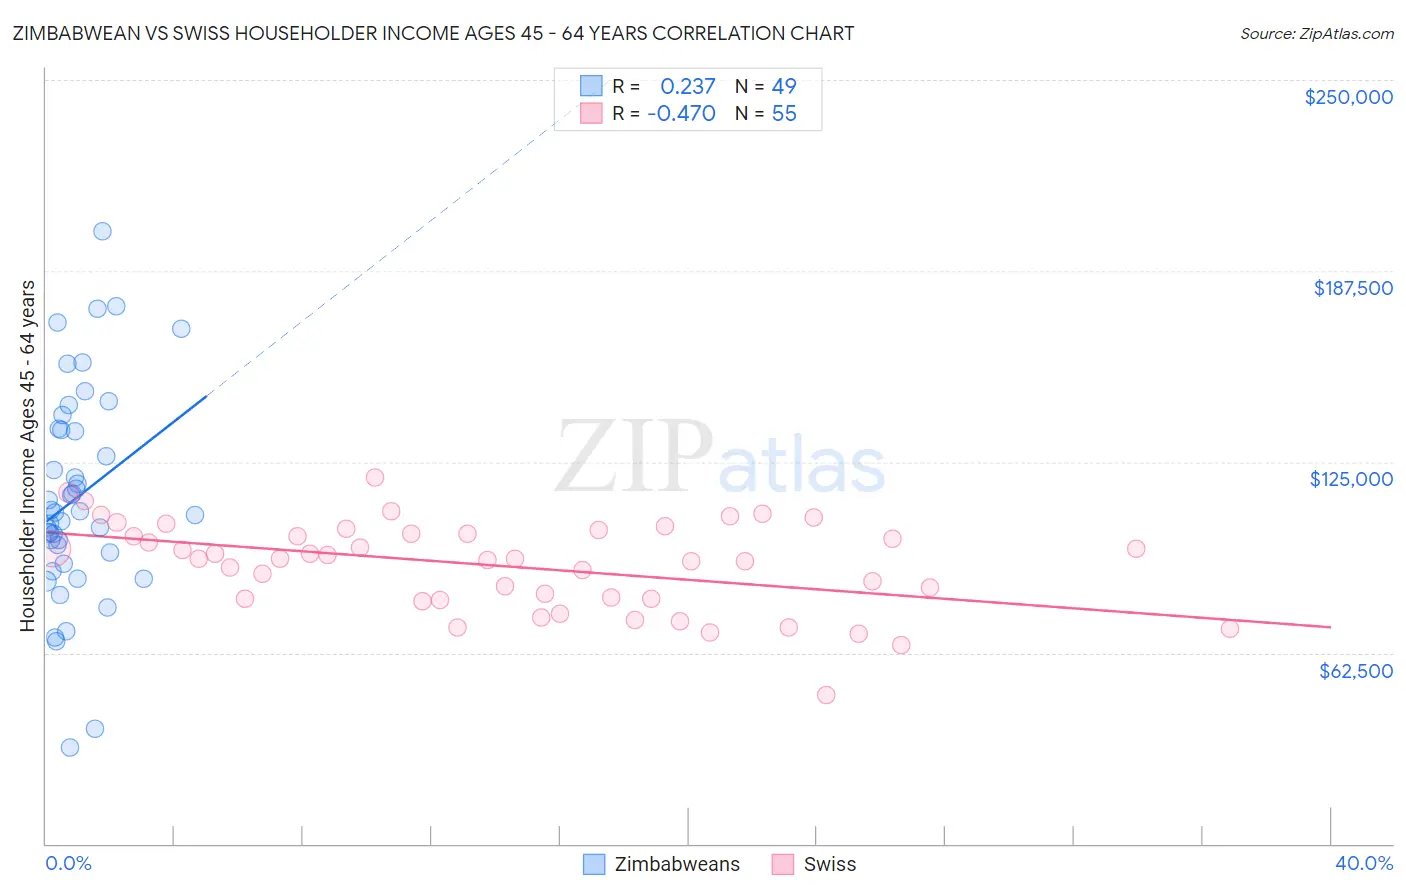 Zimbabwean vs Swiss Householder Income Ages 45 - 64 years